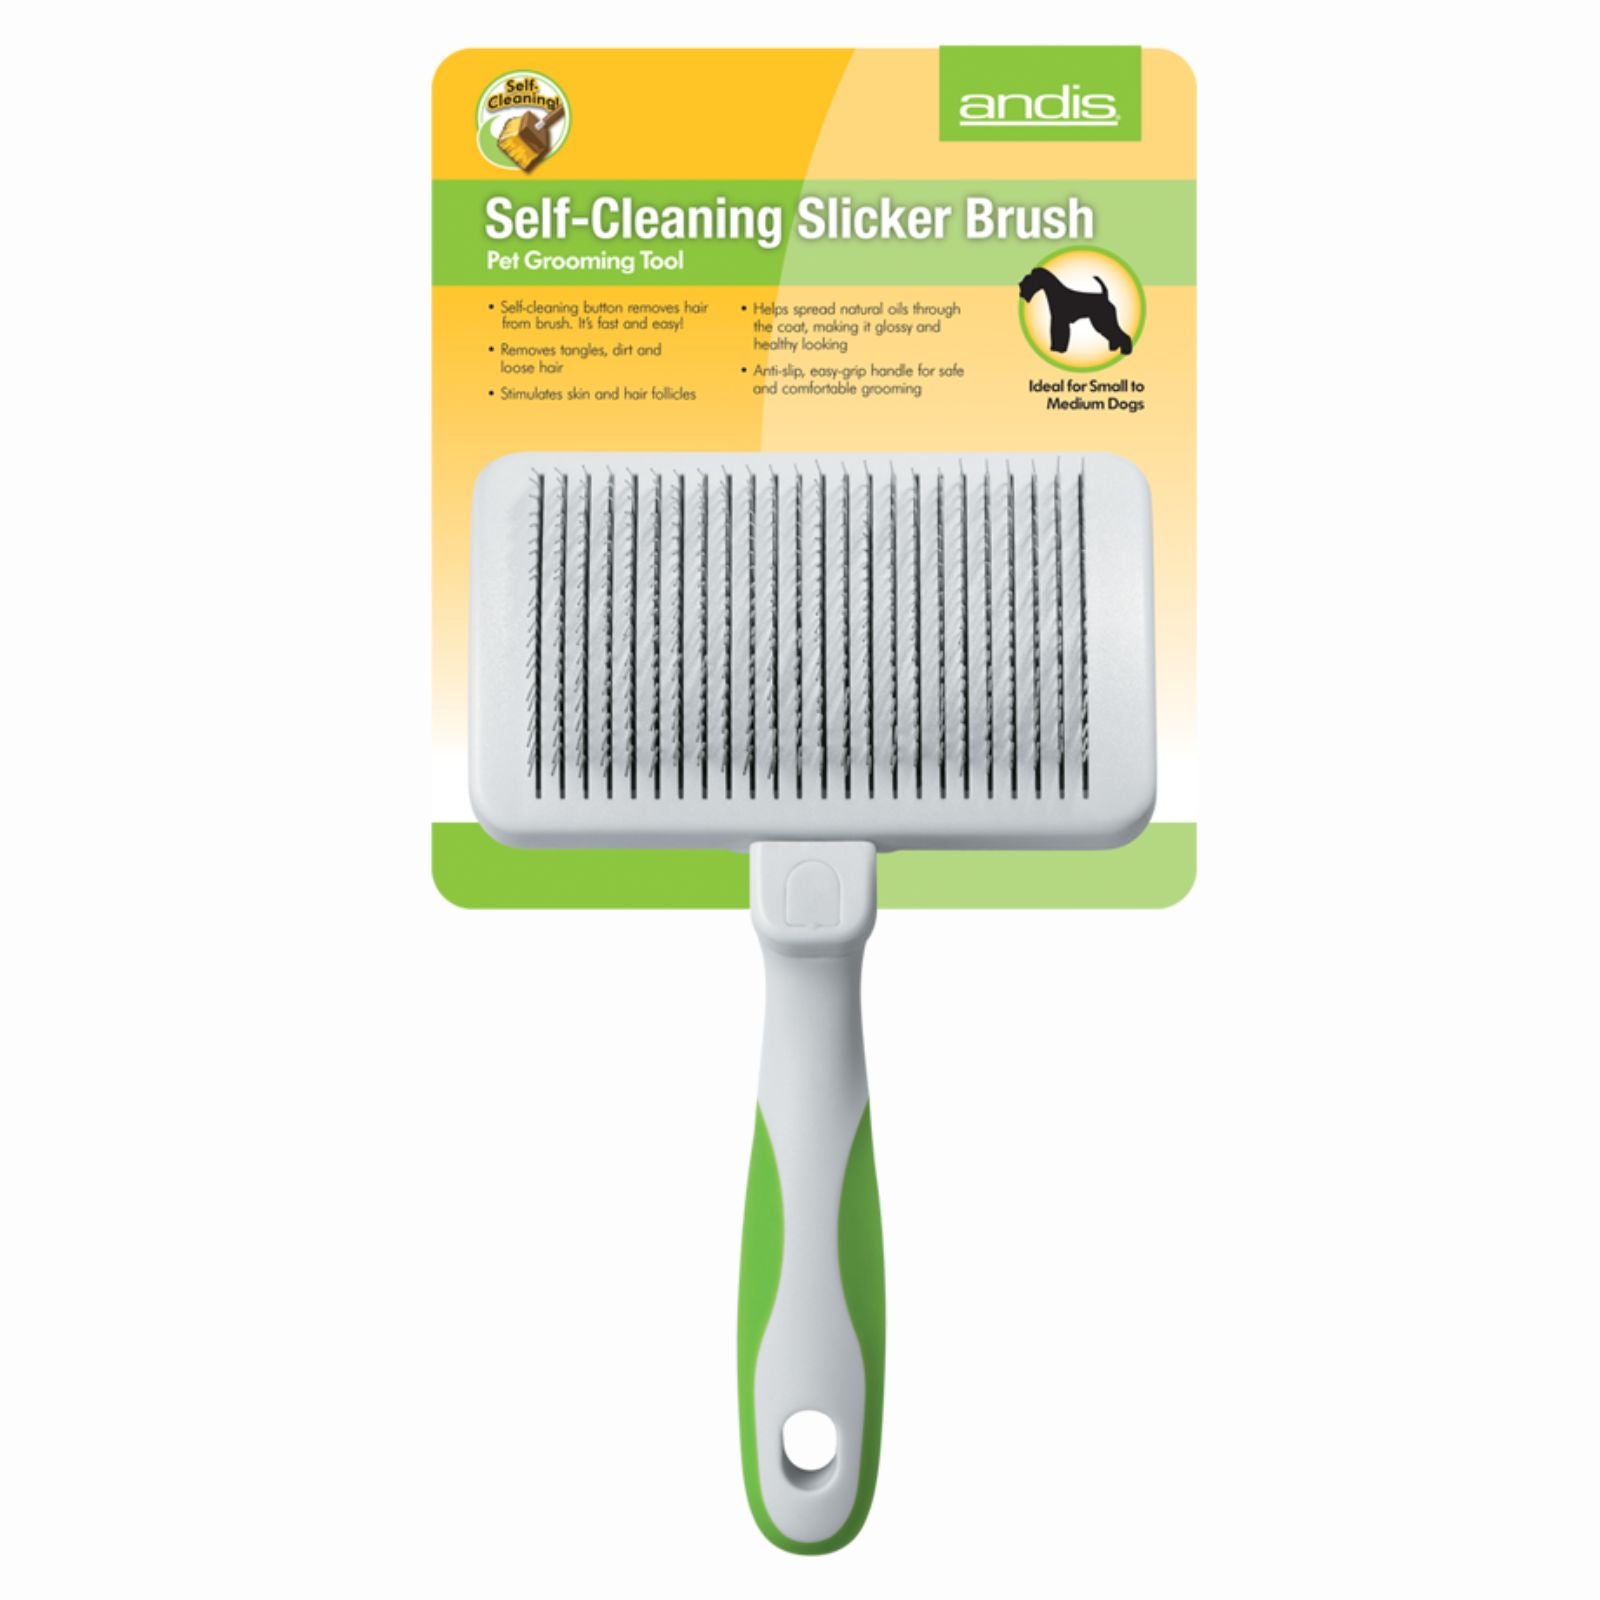 ANDIS Self-Cleaning Slicker Brush De-Shedding Tool